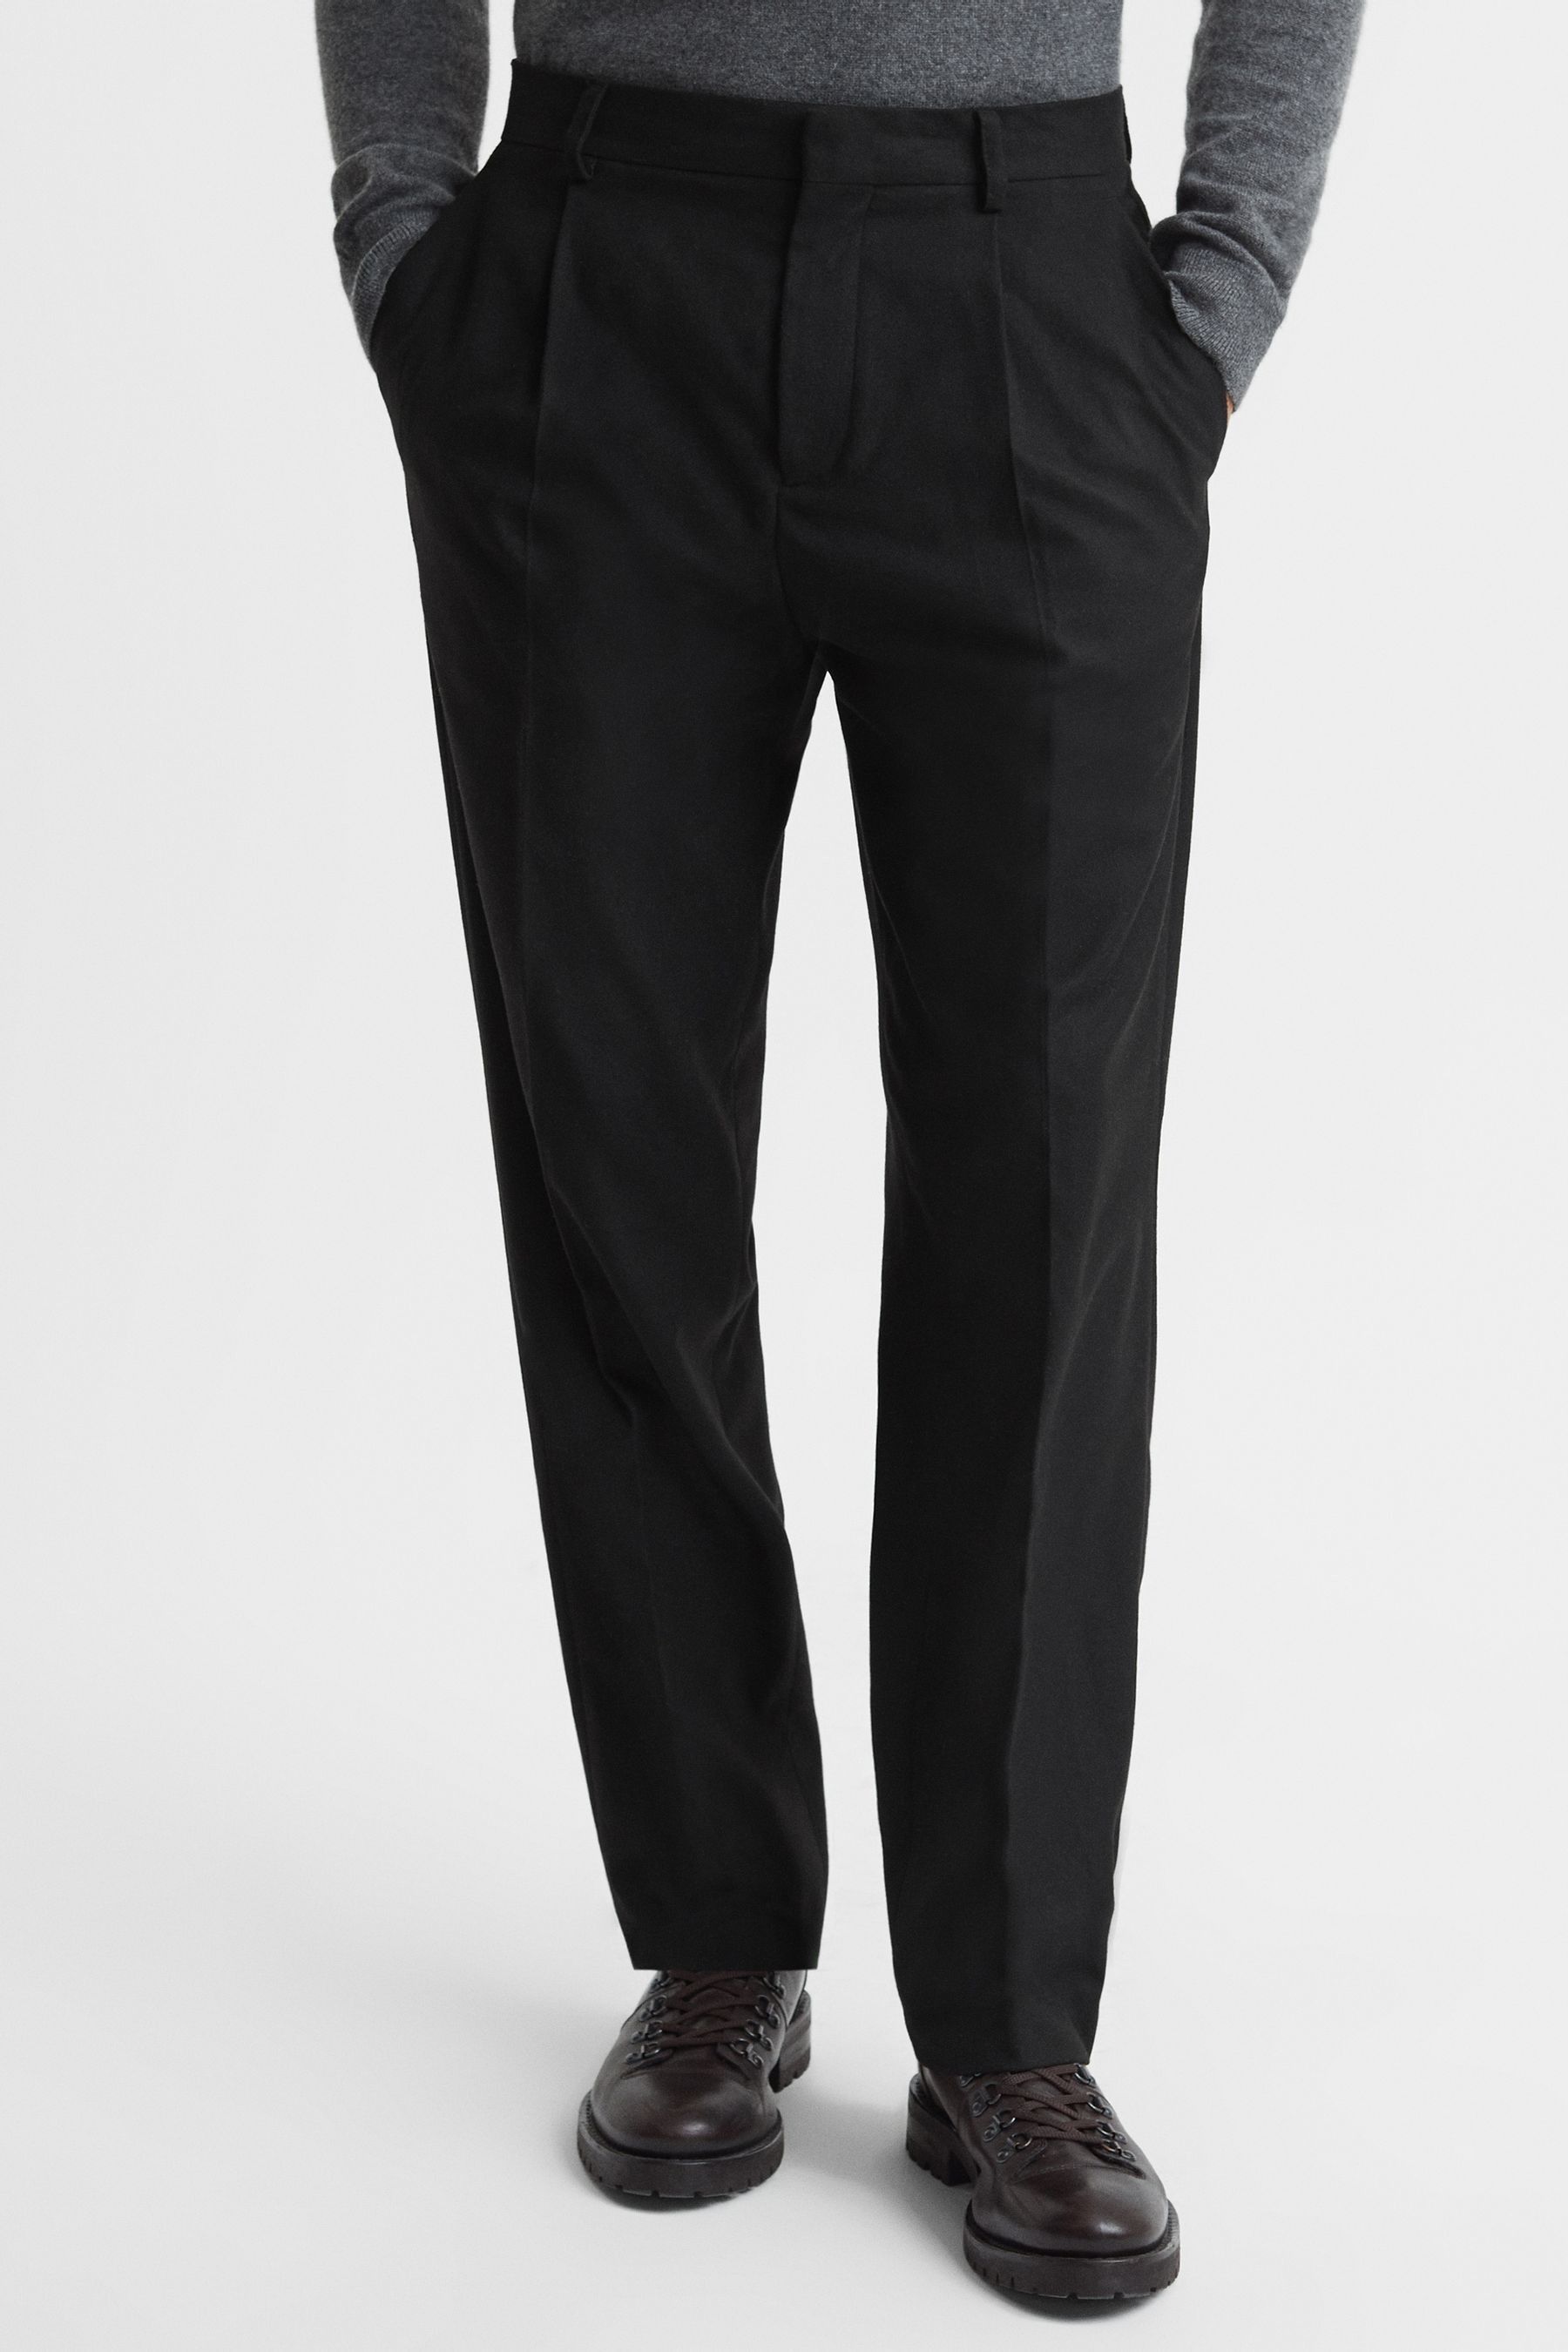 Reiss Lounge - Black Slim Fit Flannel Trousers, 34